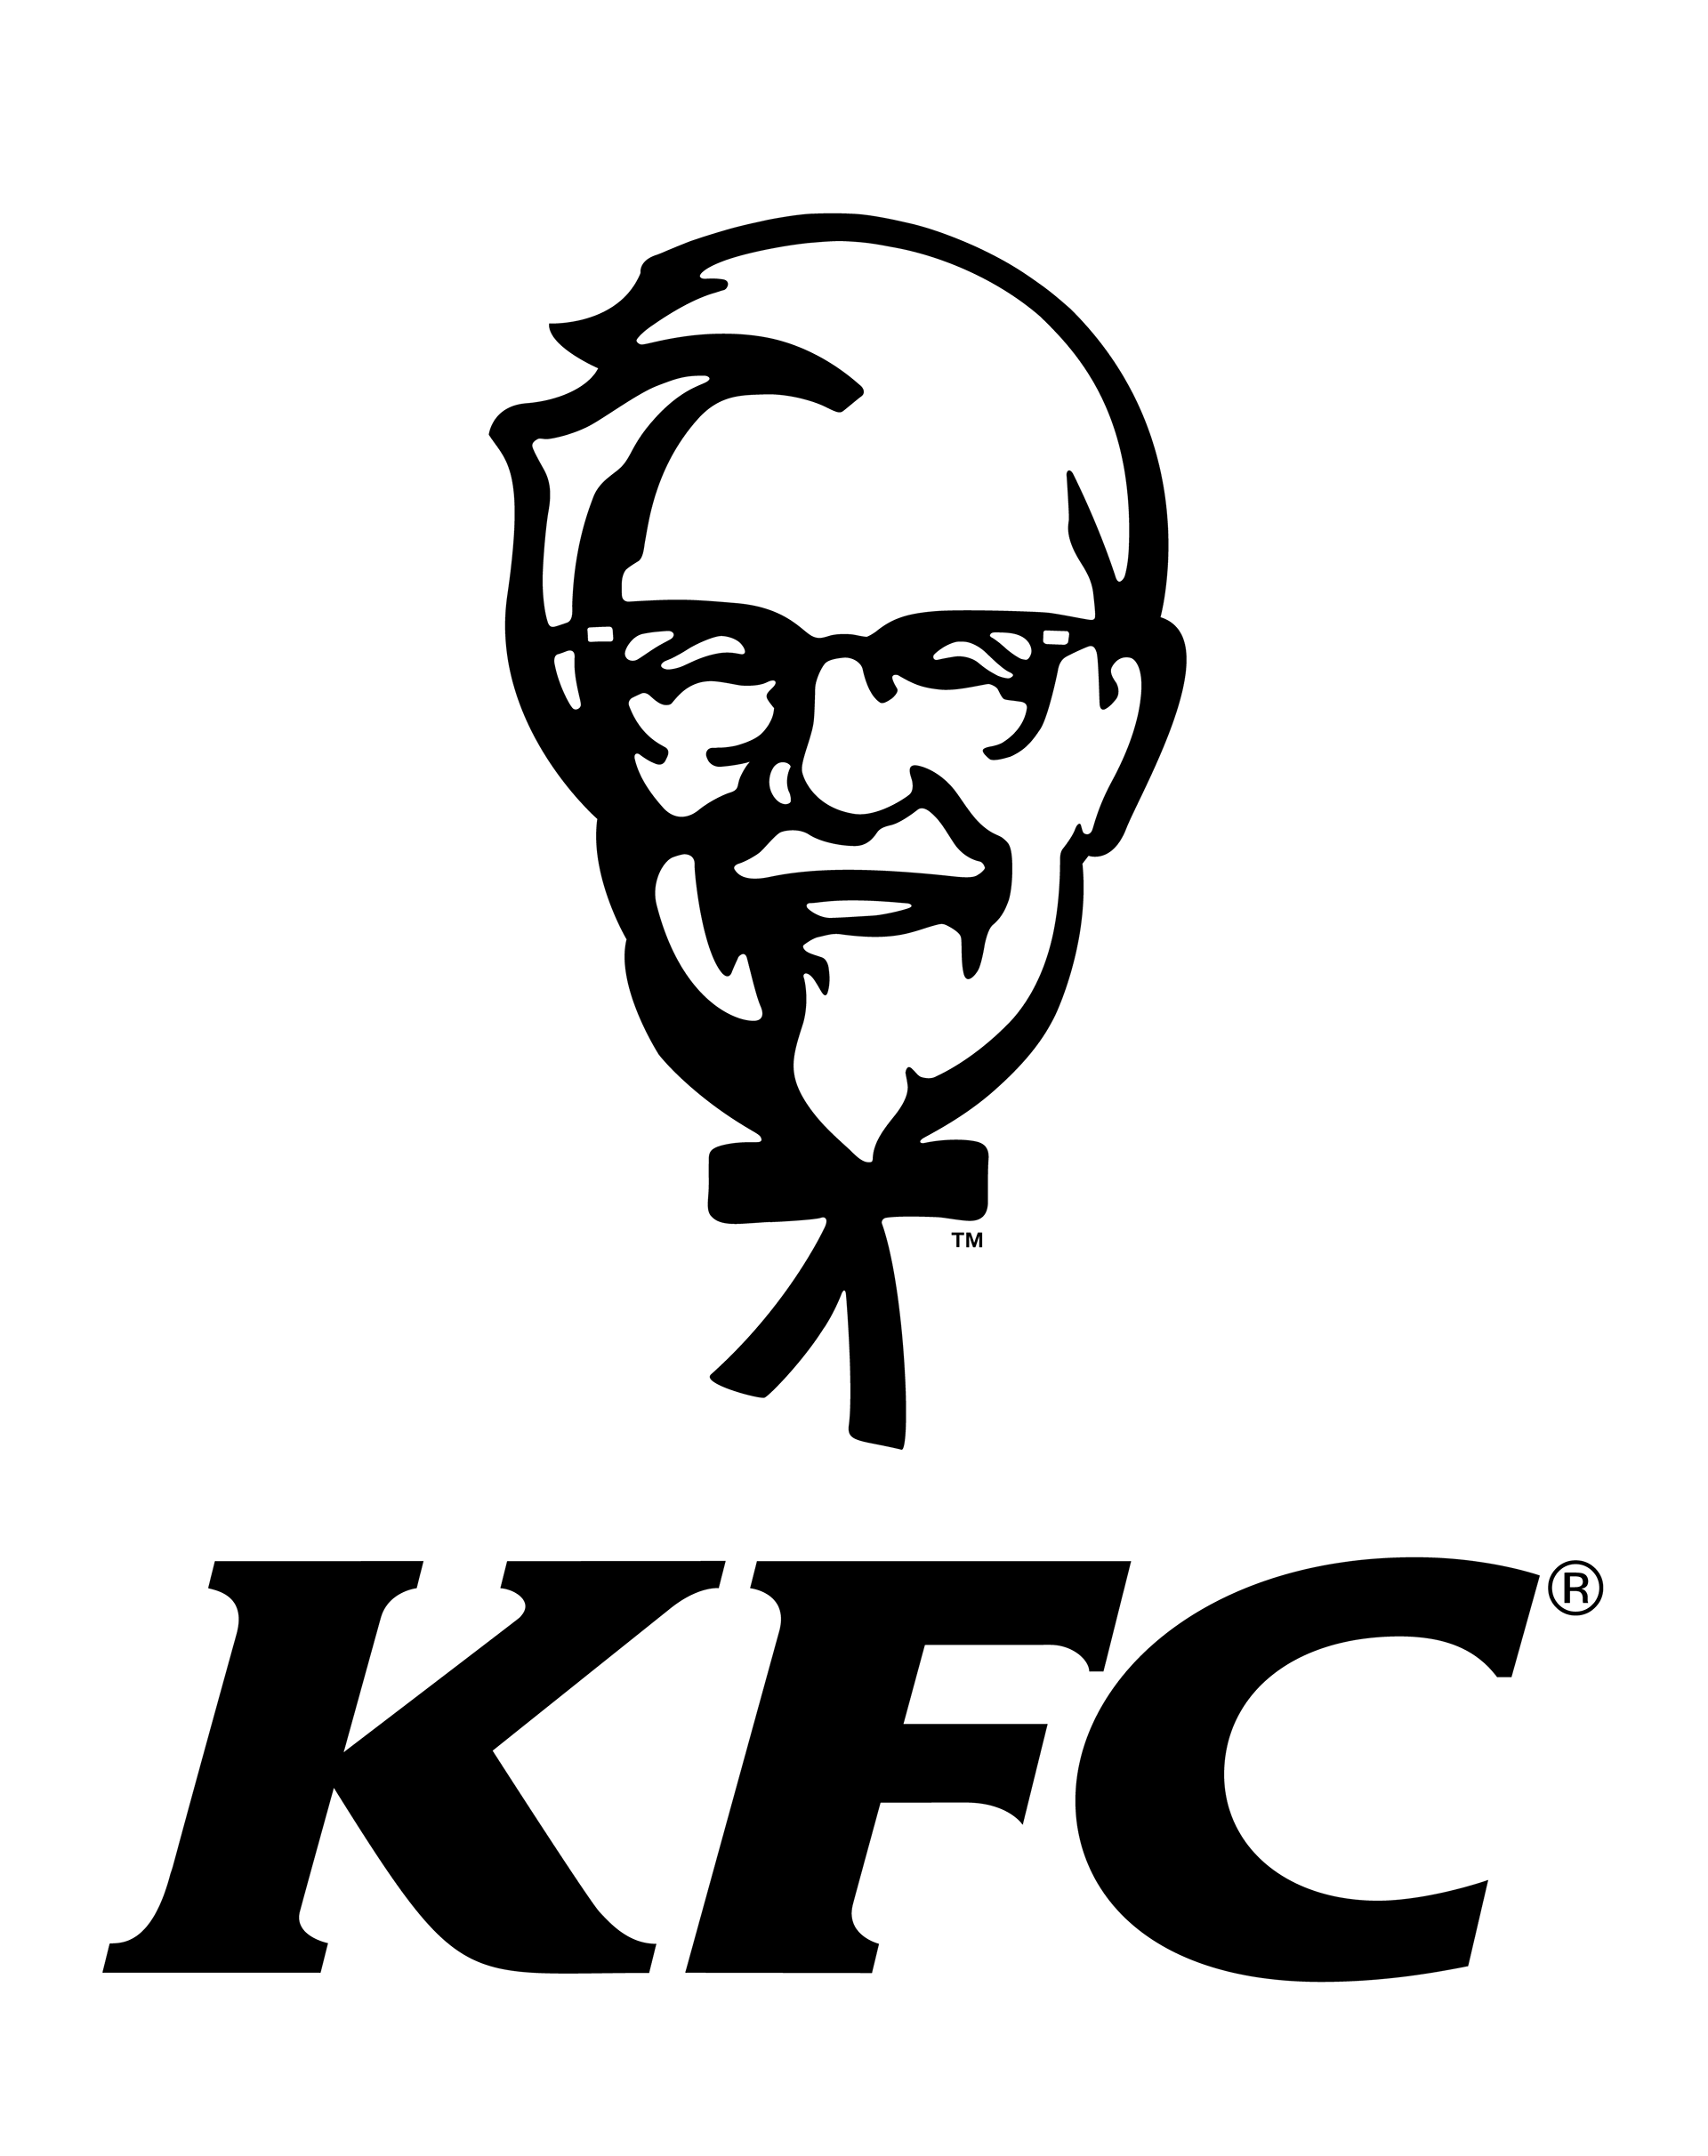 kfc logo black and white